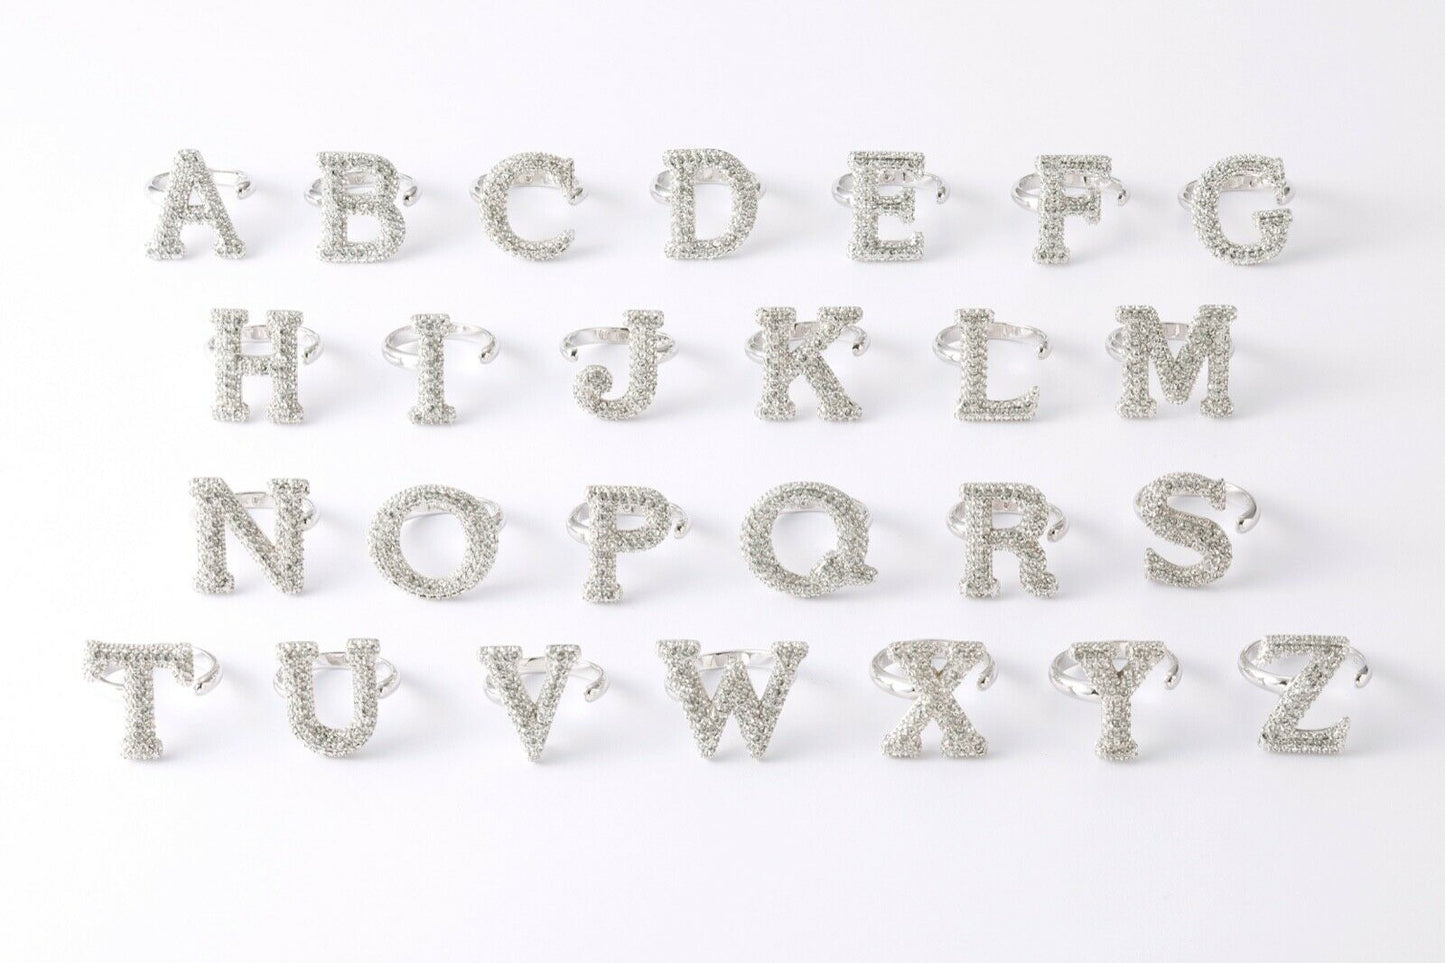 Alphabet Ring Initial U Swarovski Crystals Free Size Sterling Silver 925 Rhodium Plated